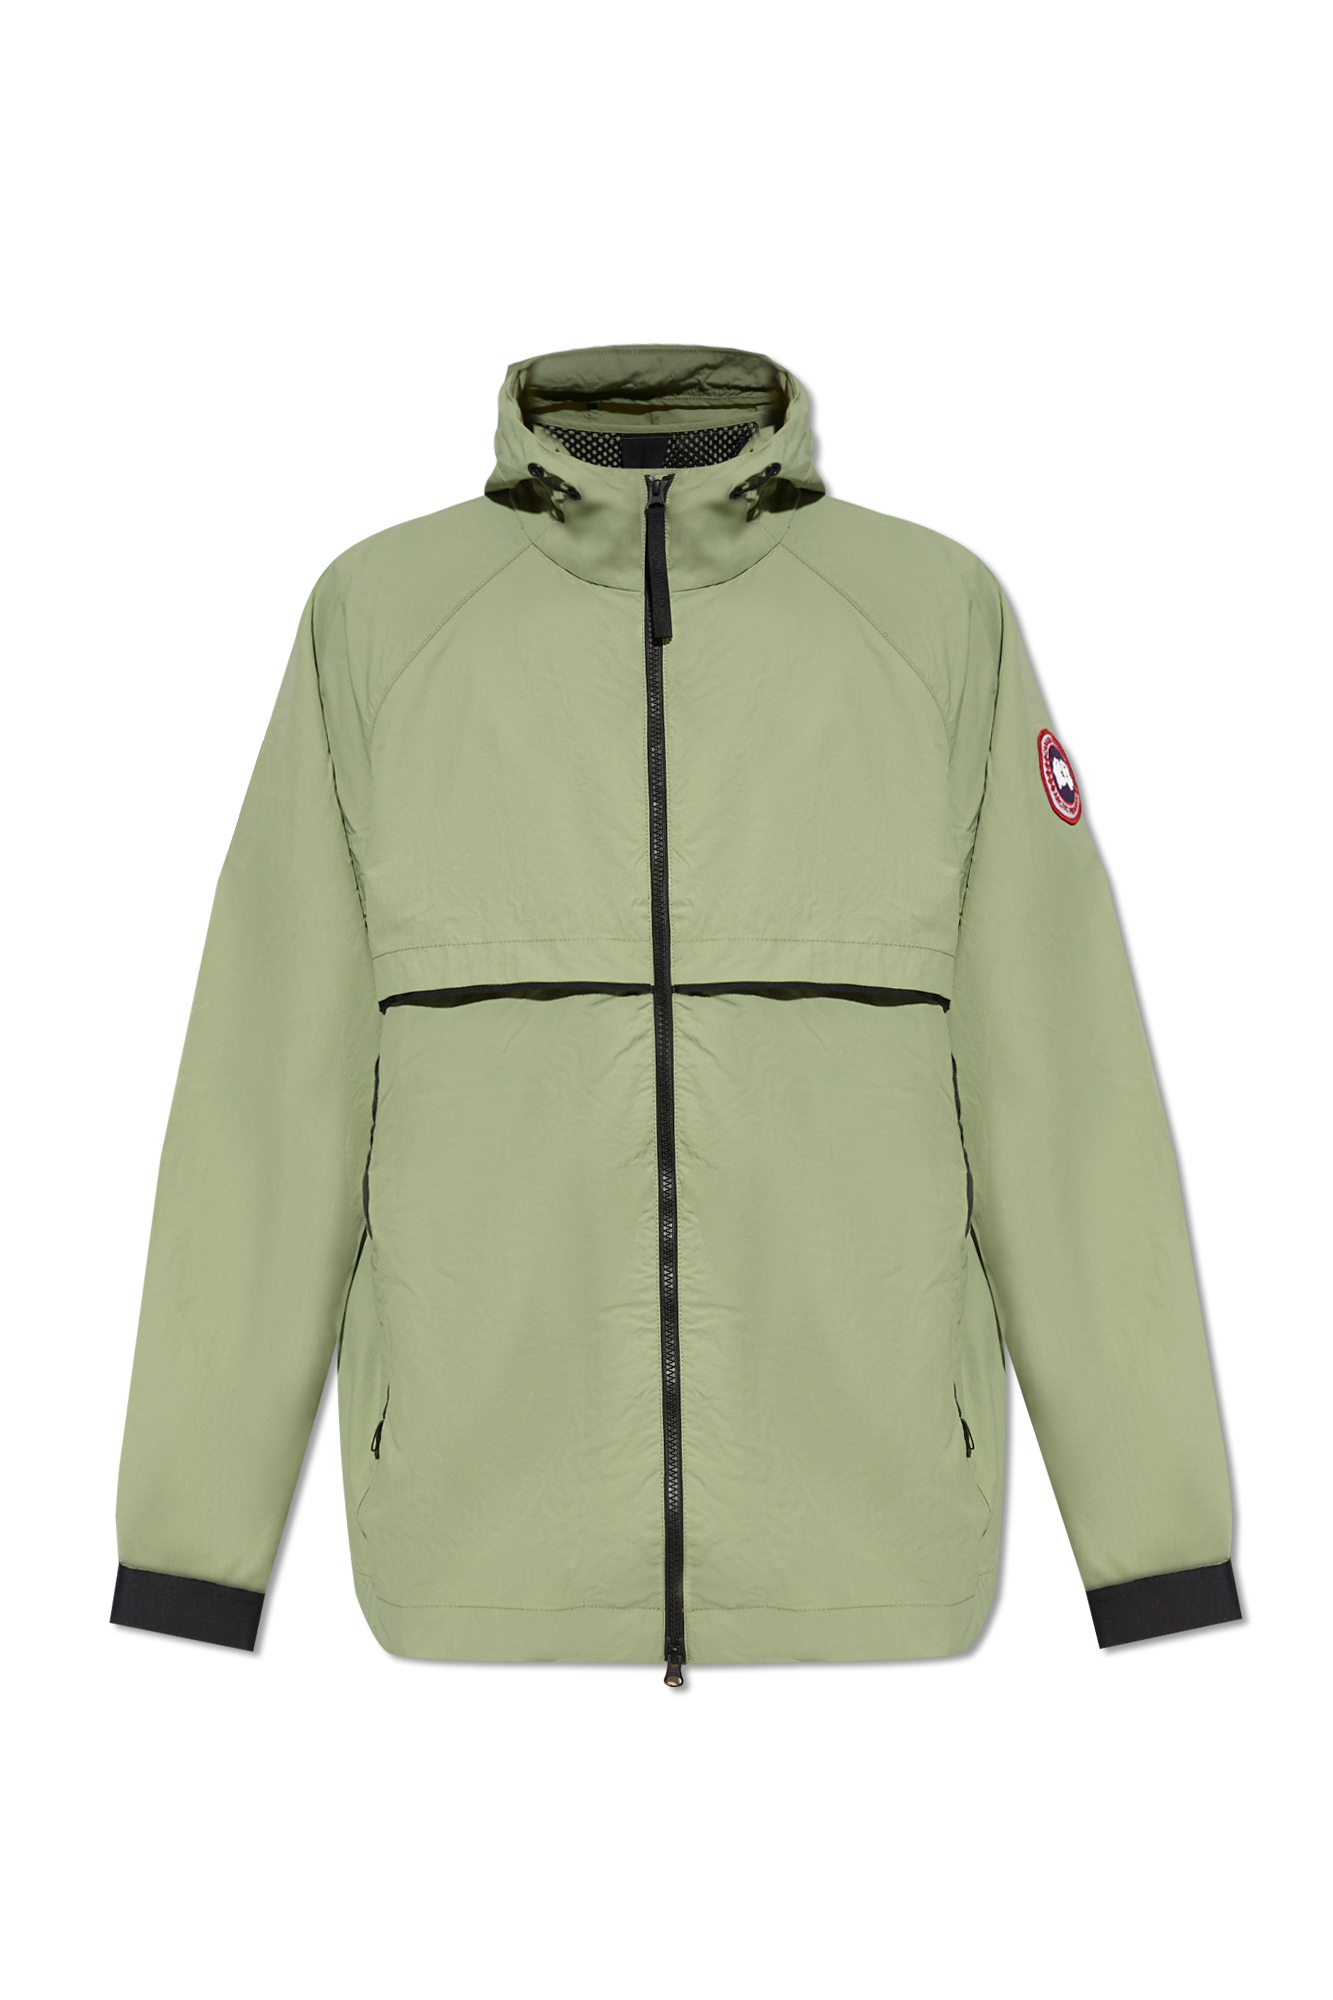 Green 'Faber' jacket Canada Goose - Vitkac Canada